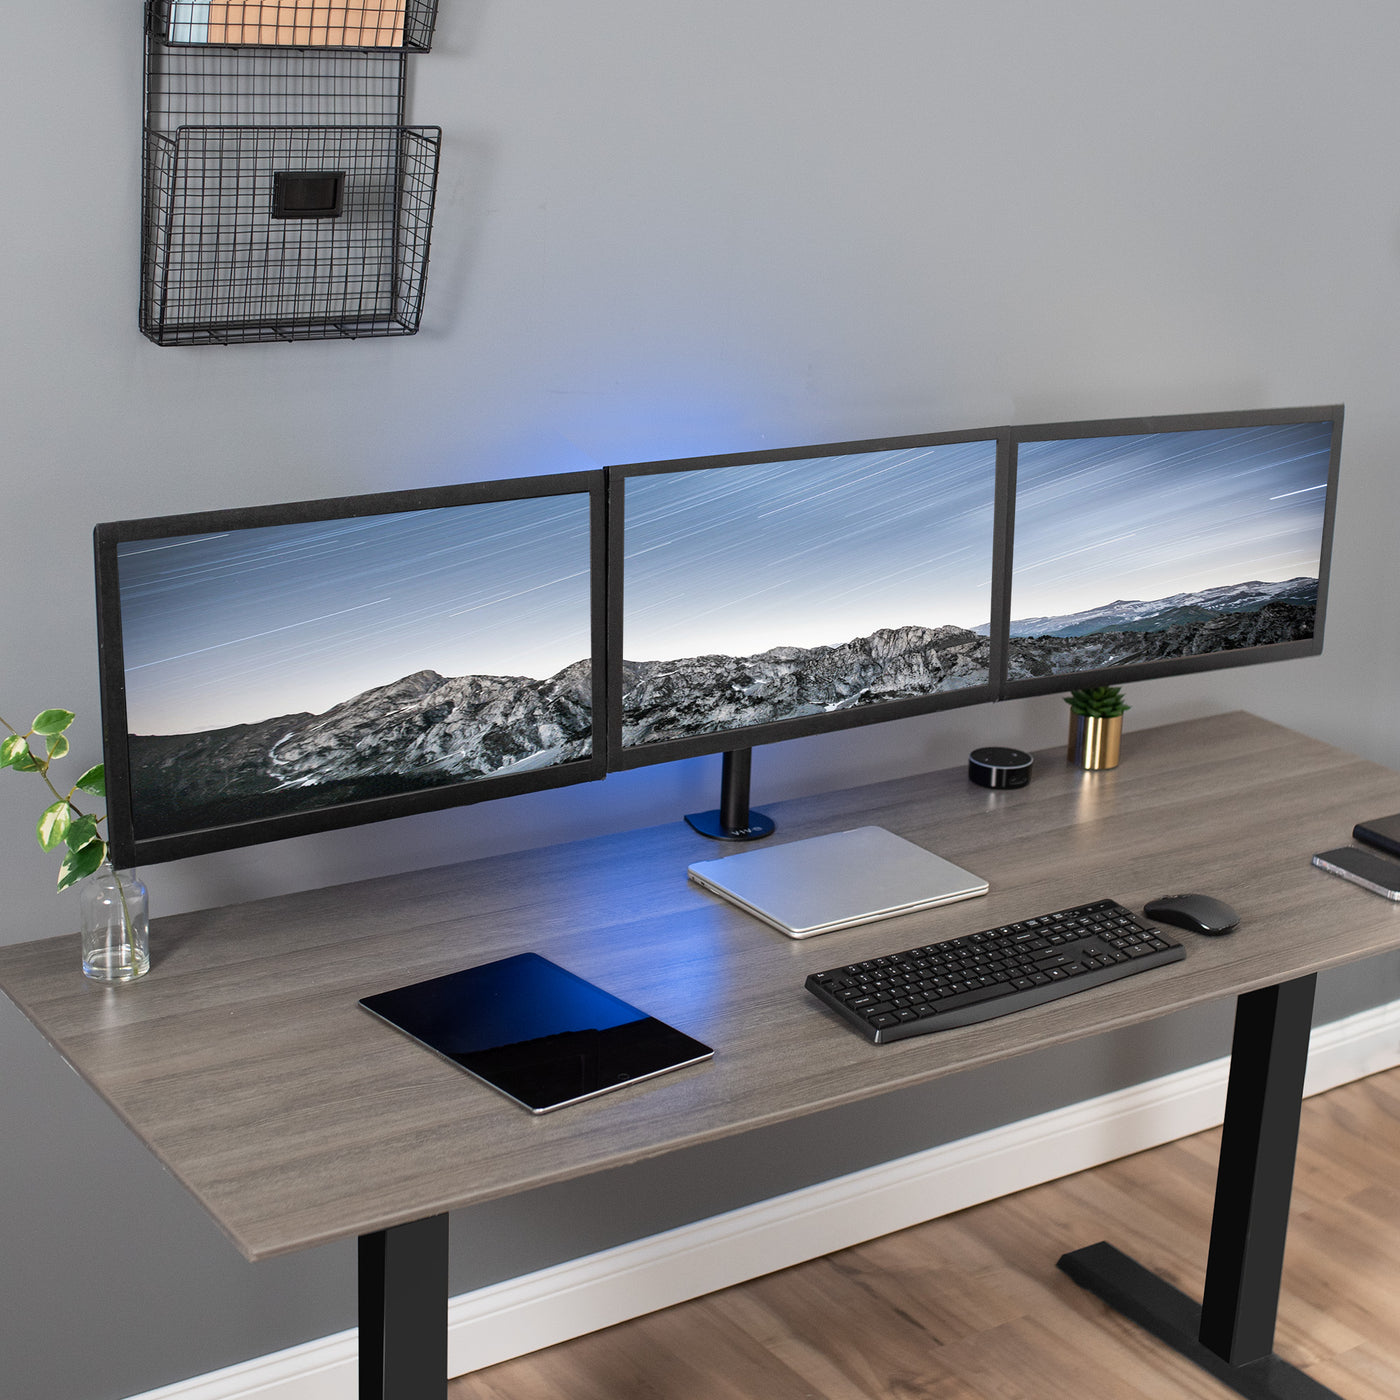 Sturdy height adjustable triple monitor desk mount.